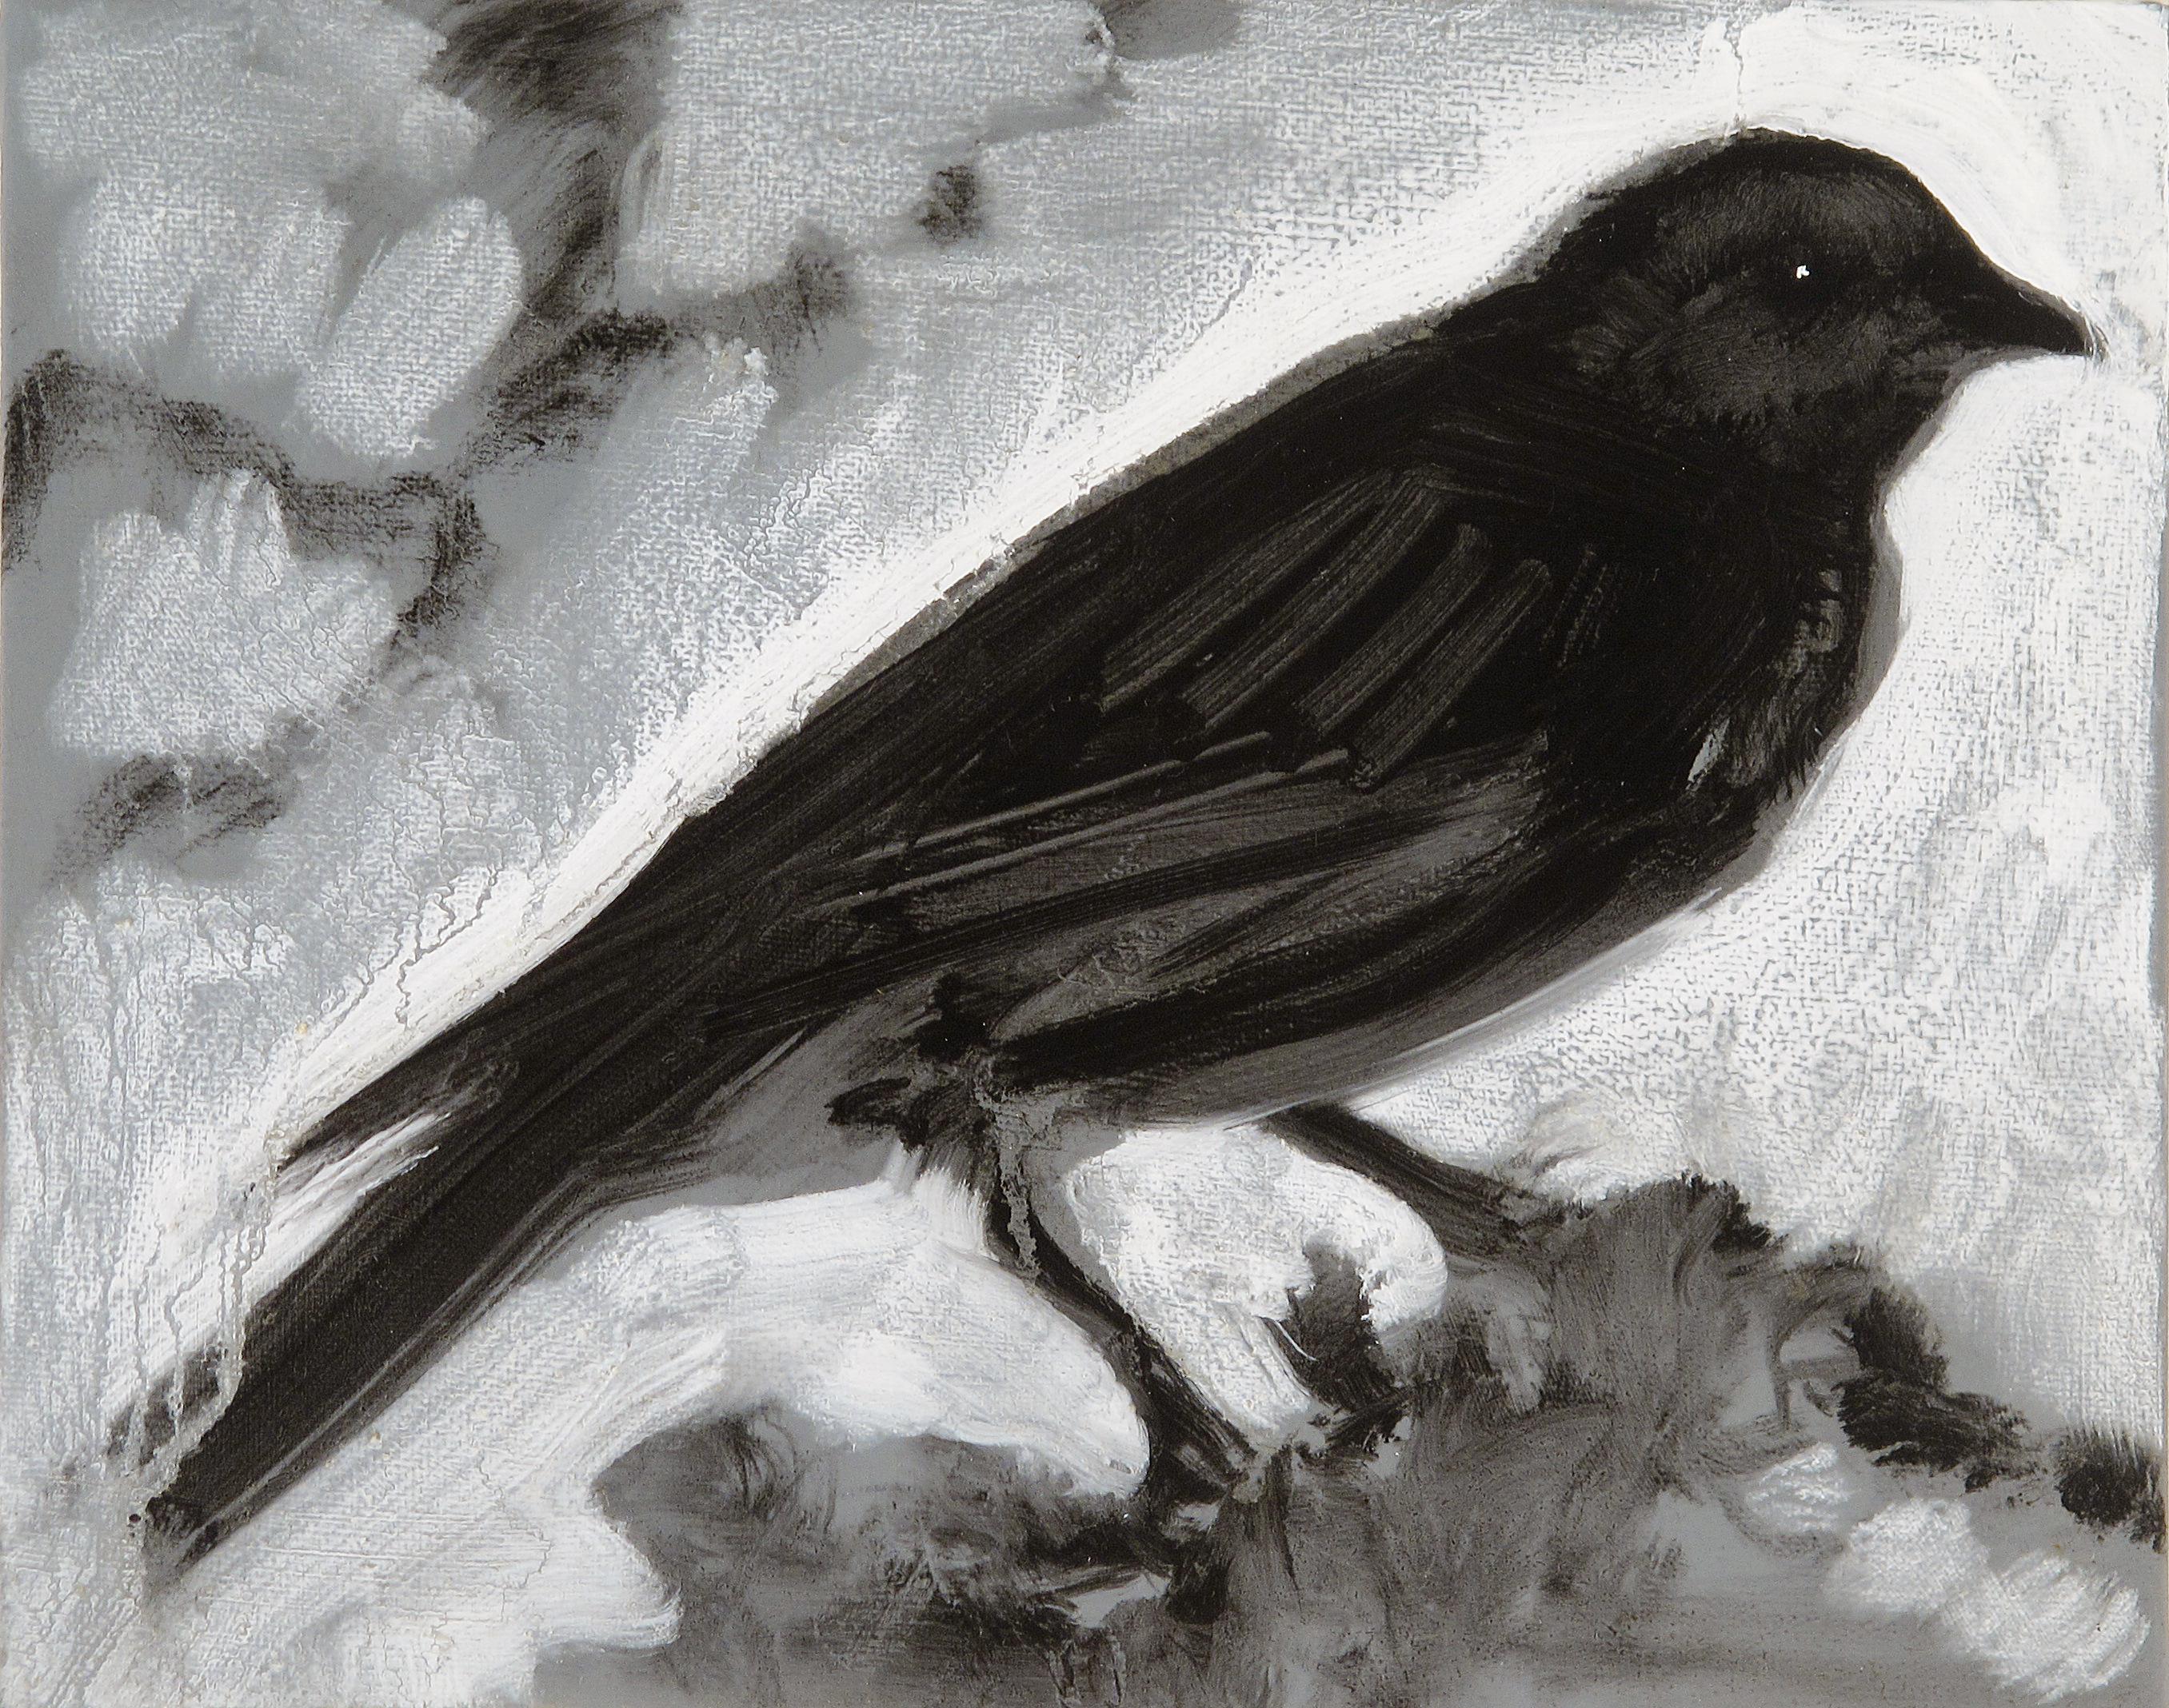 Animal Painting Audrey Anastasi - Oiseau monochrome Darkling, gris noir et blanc